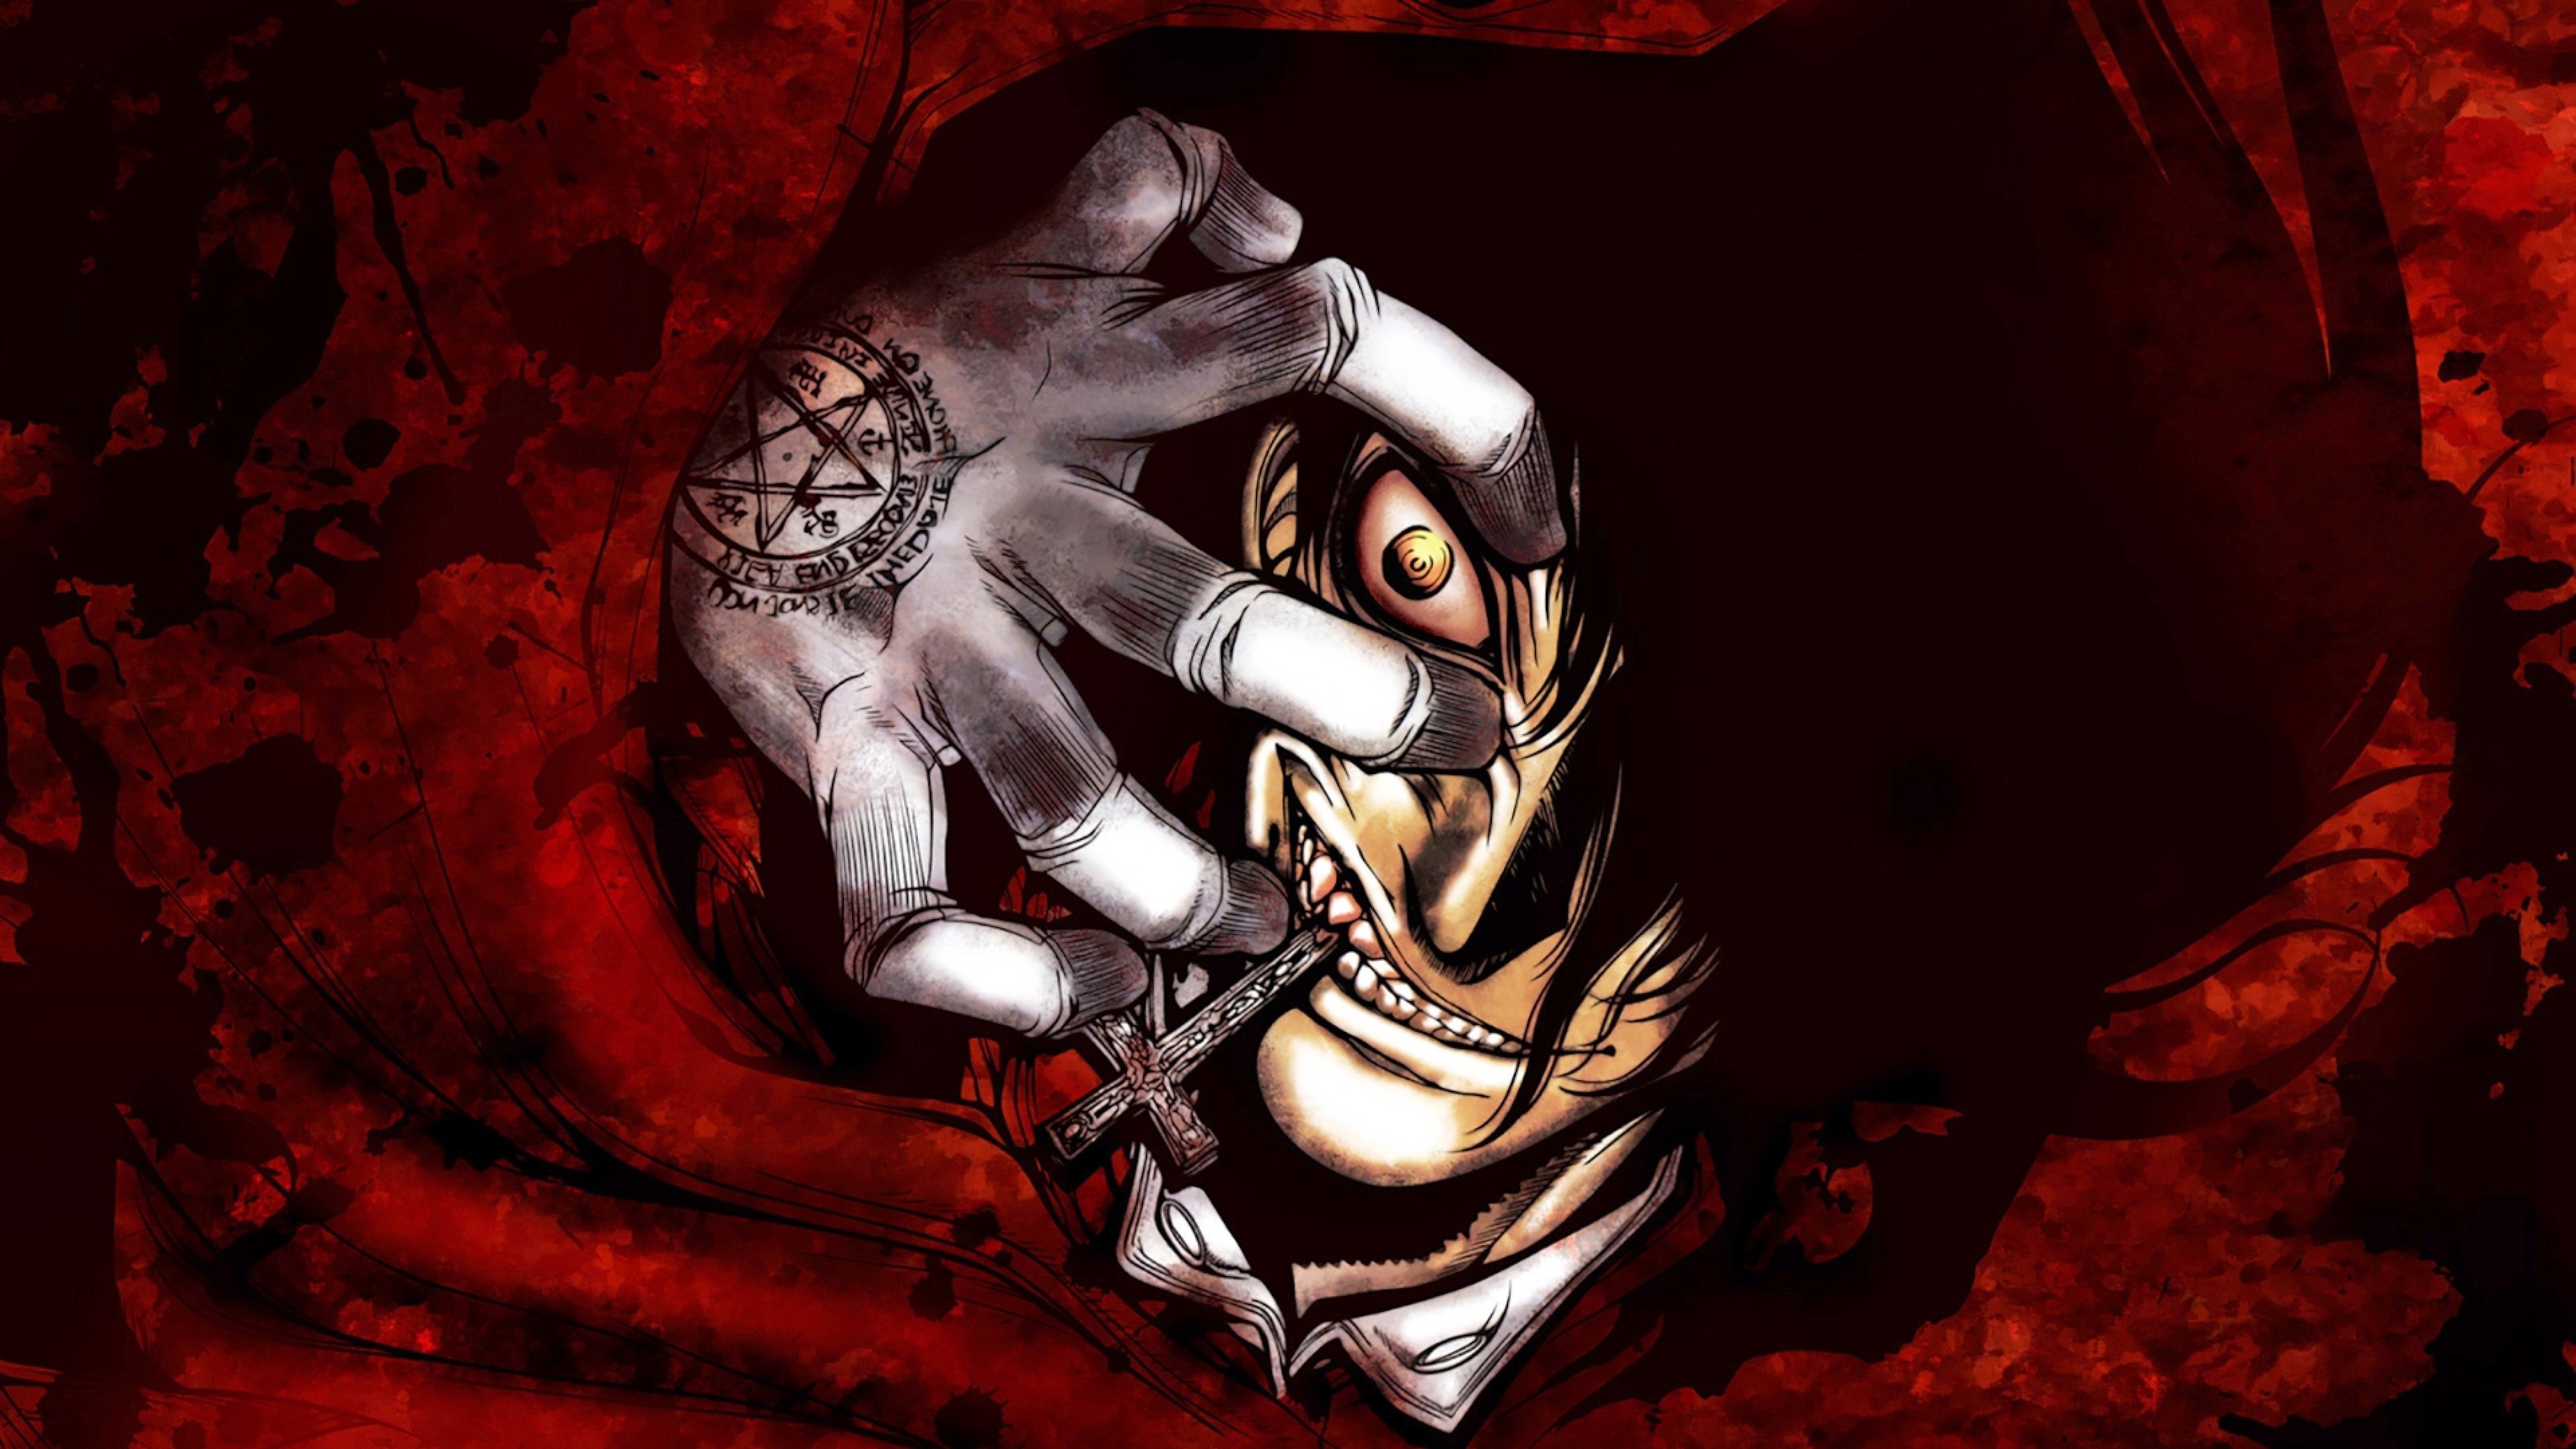 alucard hellsing wallpaper,red,illustration,hand,fictional character,darkness